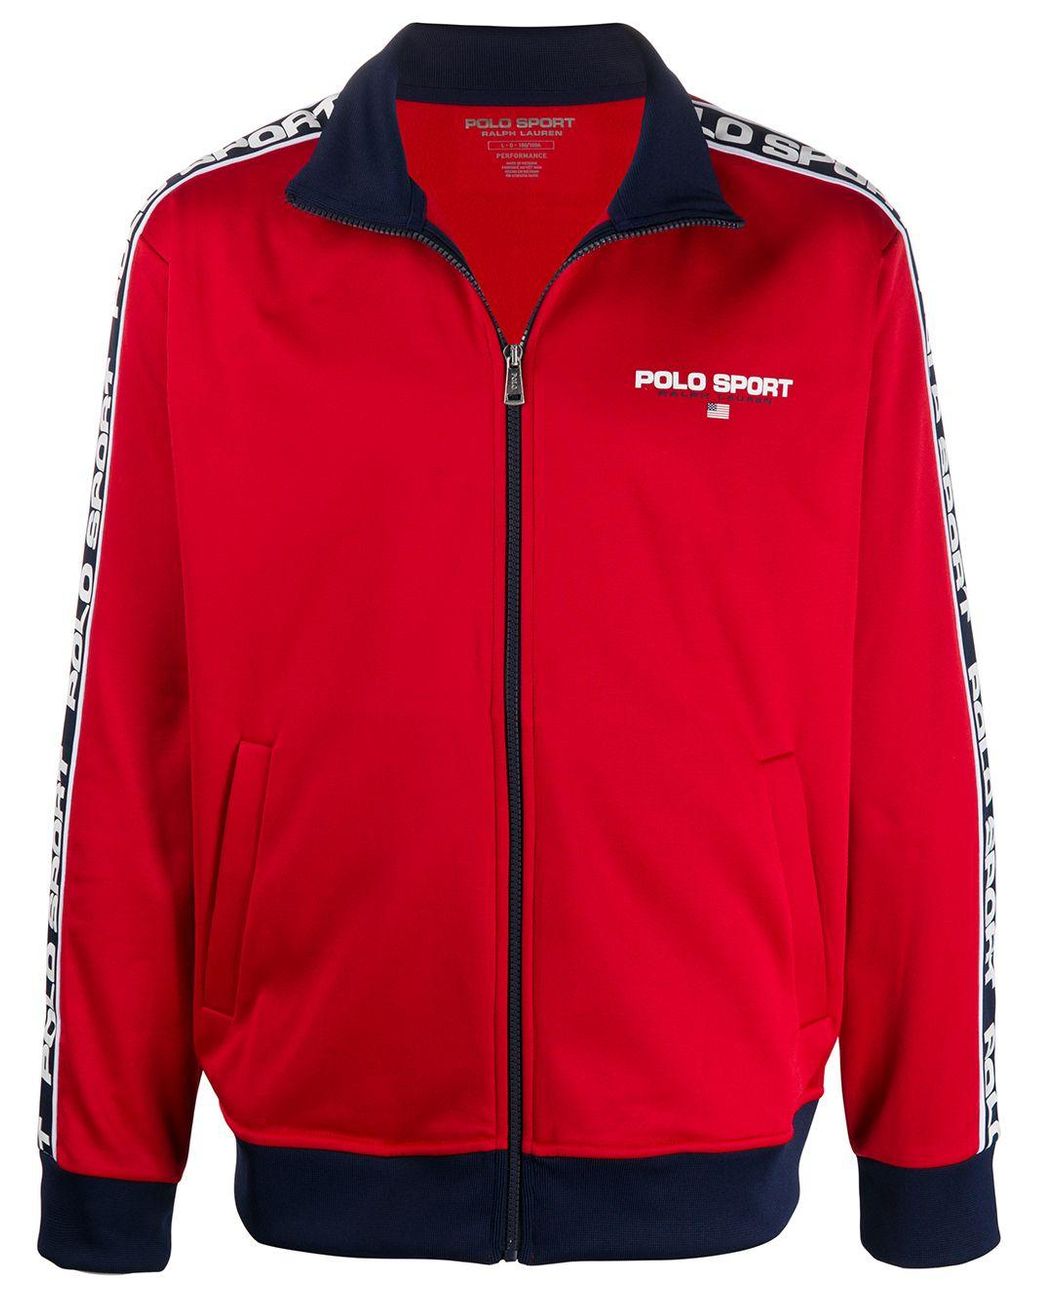 polo sport performance jacket